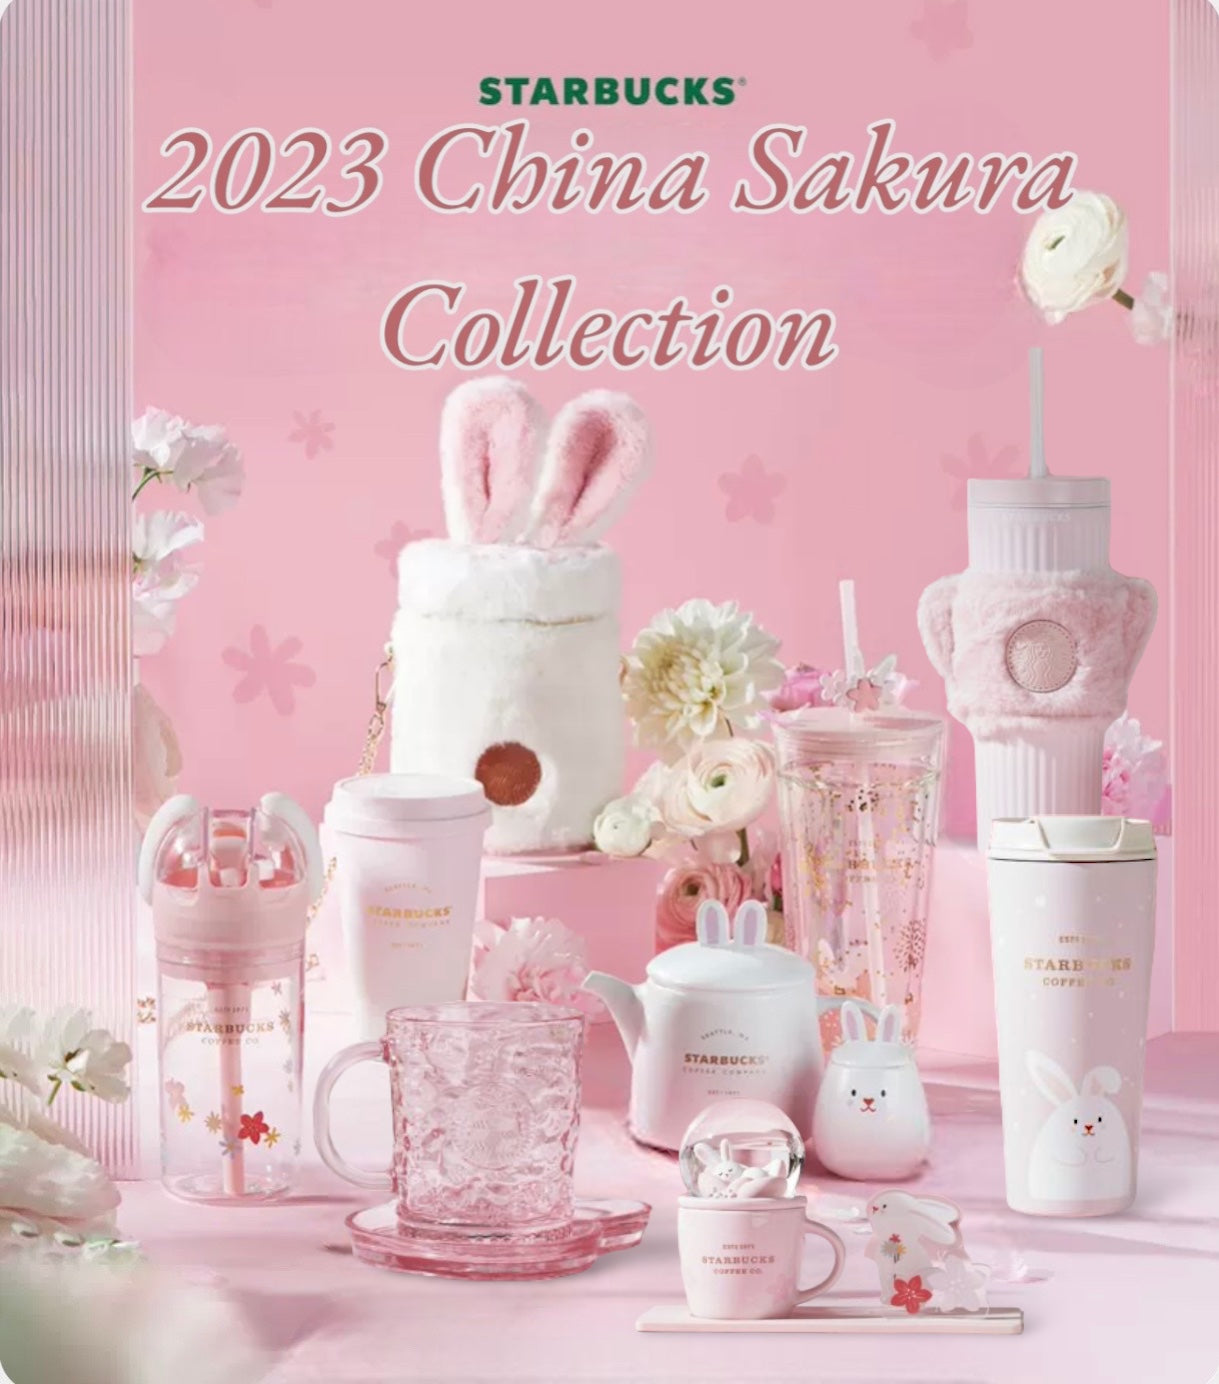 Starbucks Sakura China Collection 2023